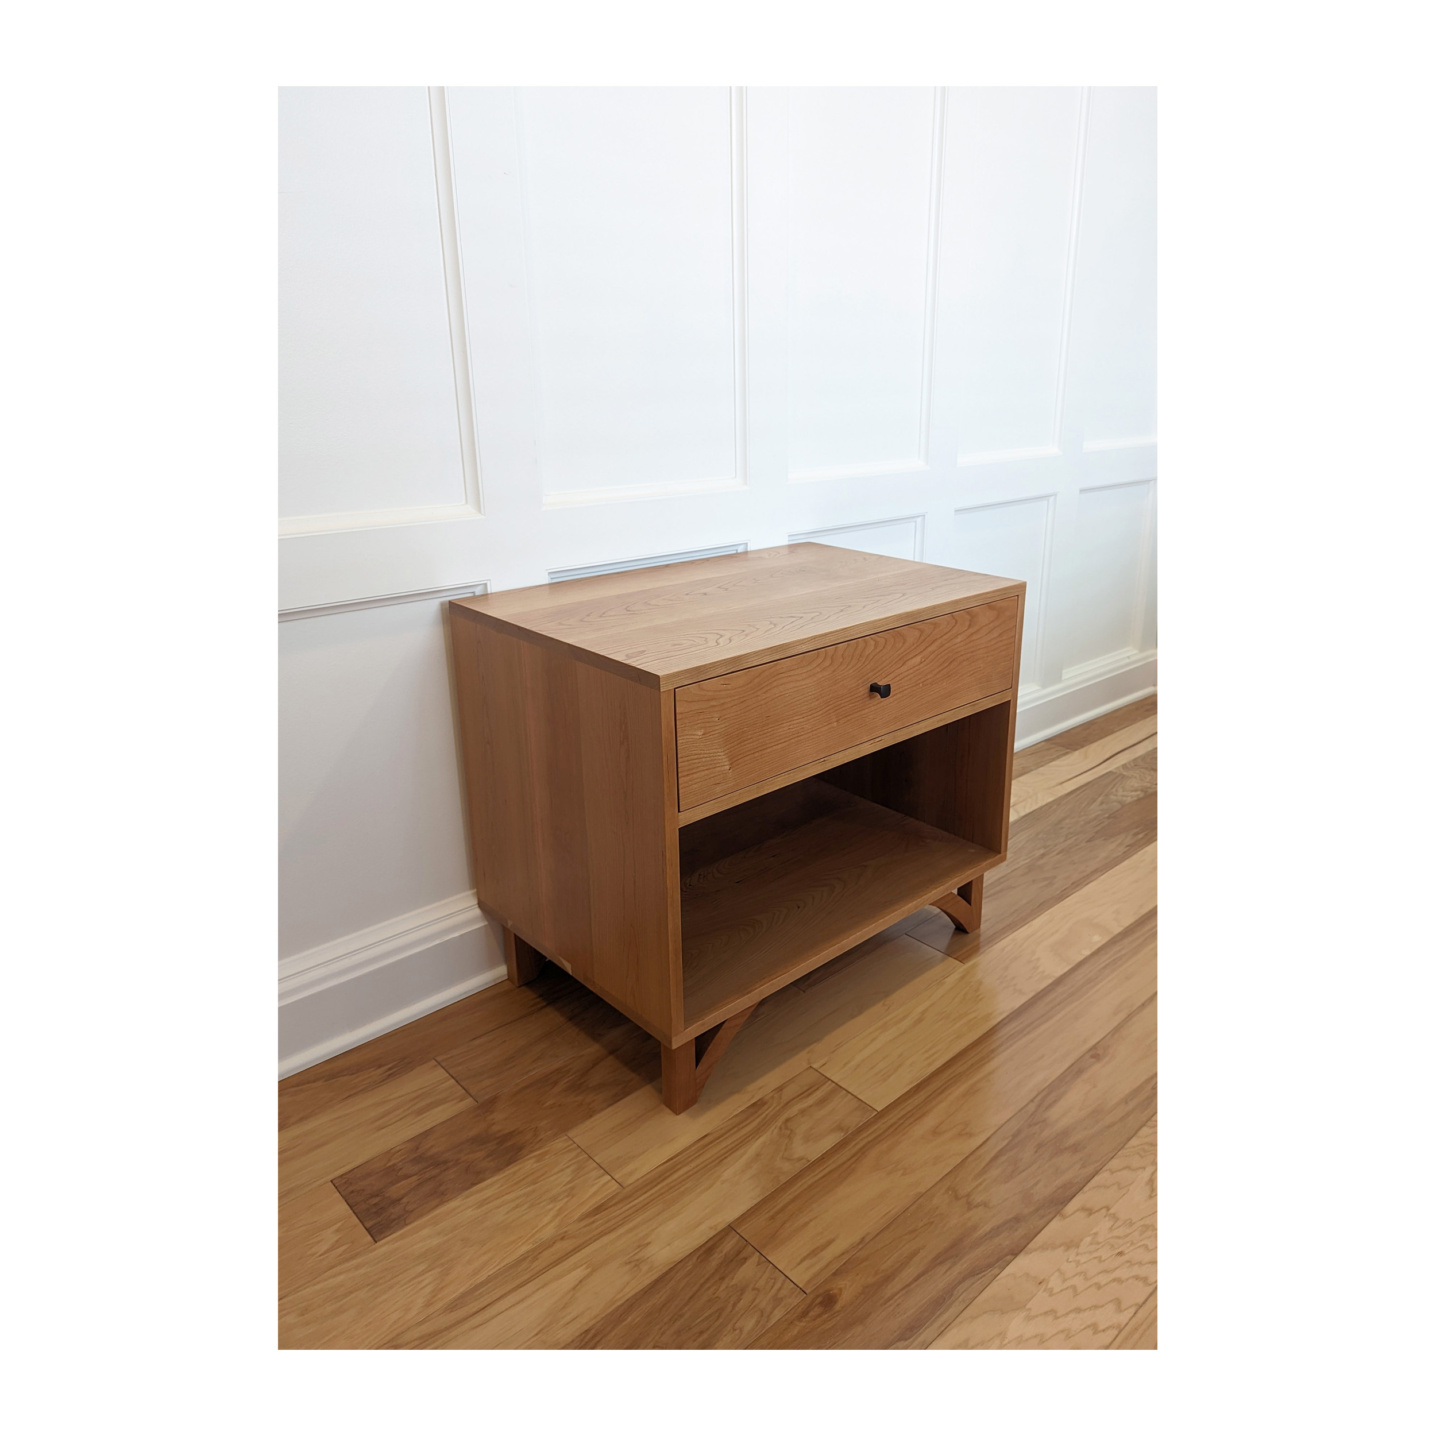 Custom solid wood nightstand